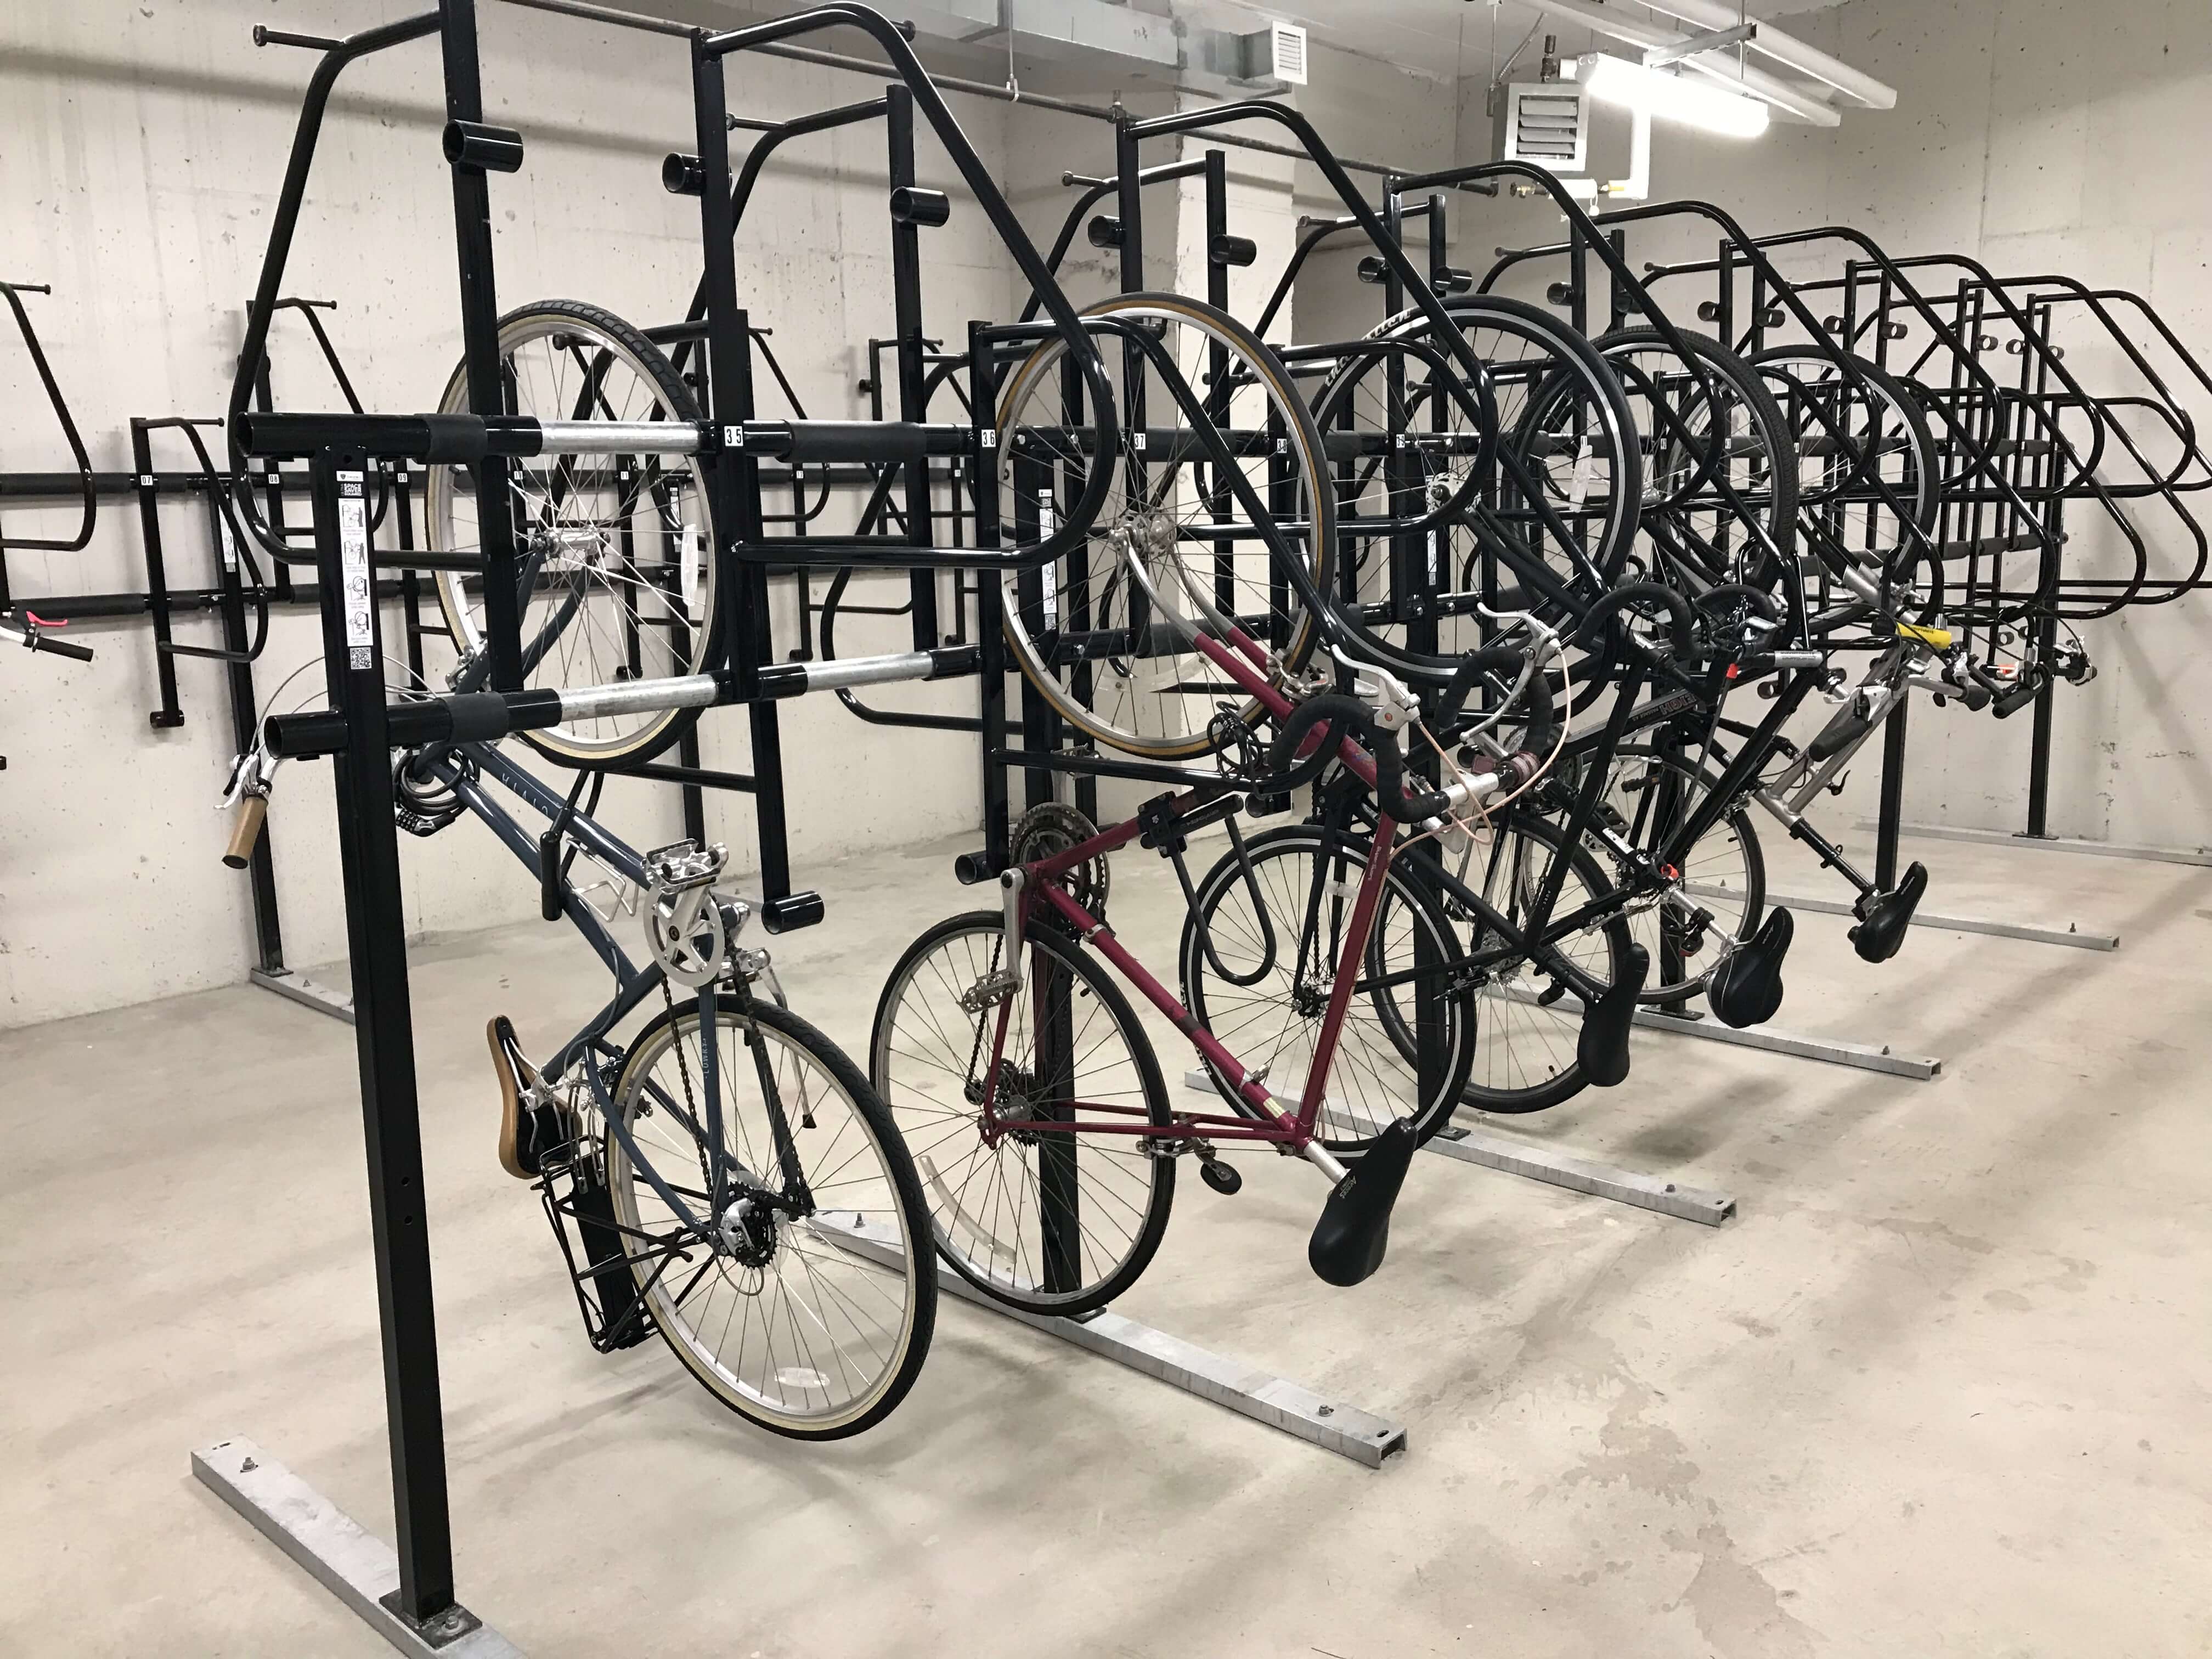 Bike workshop storage - noredpacks